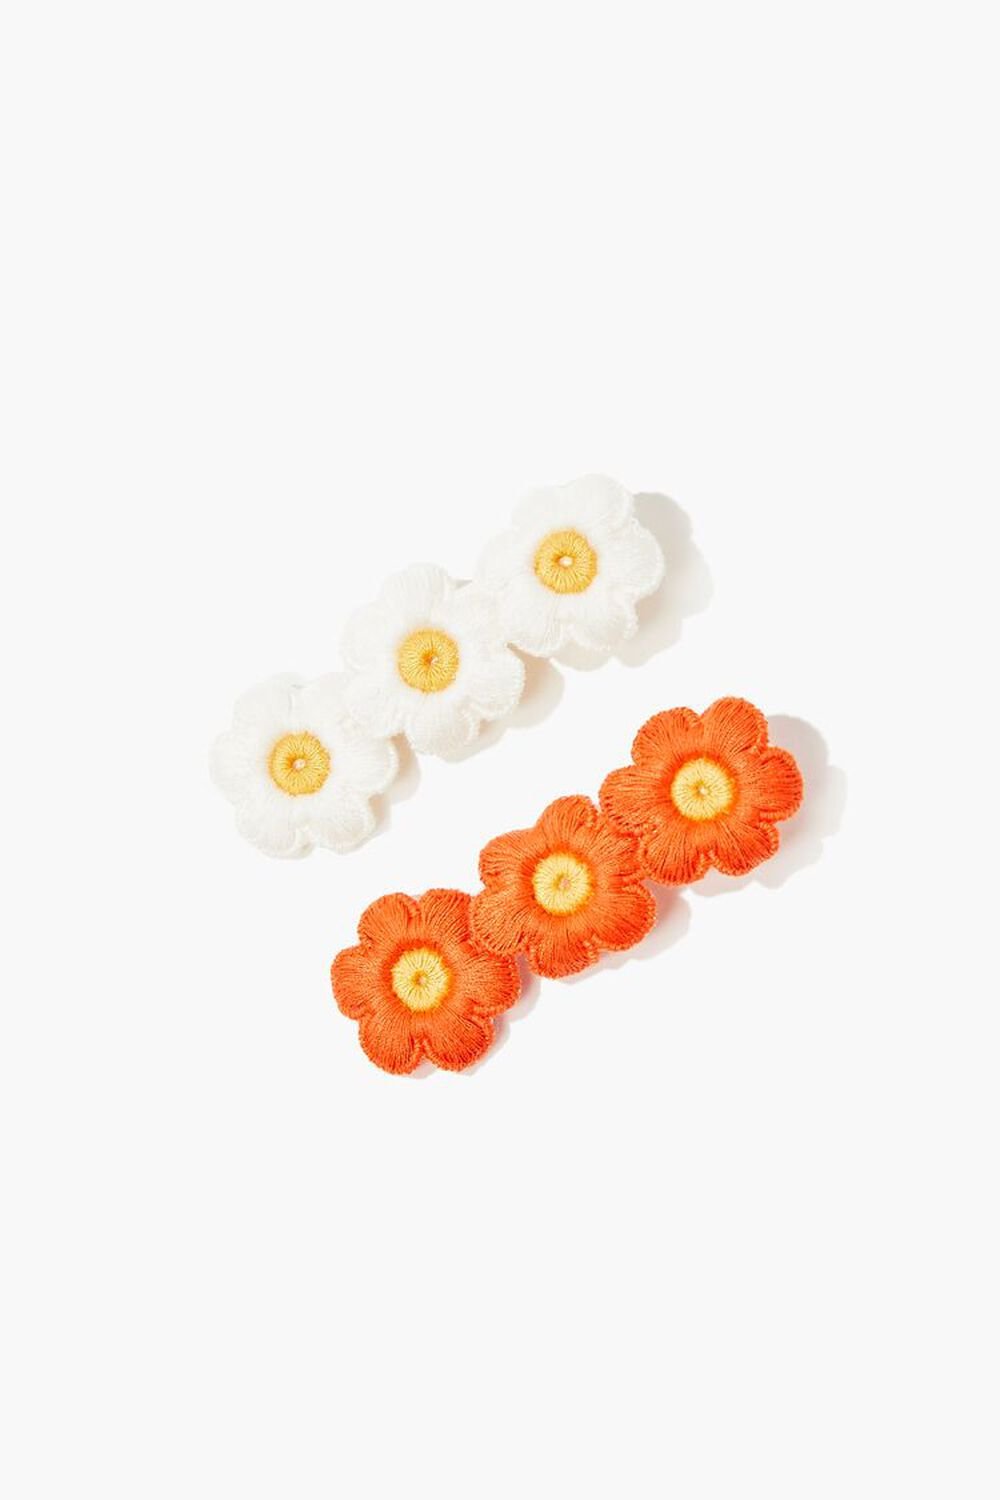 CREAM/ORANGE Embroidered Flower Gator Clip Set, image 1